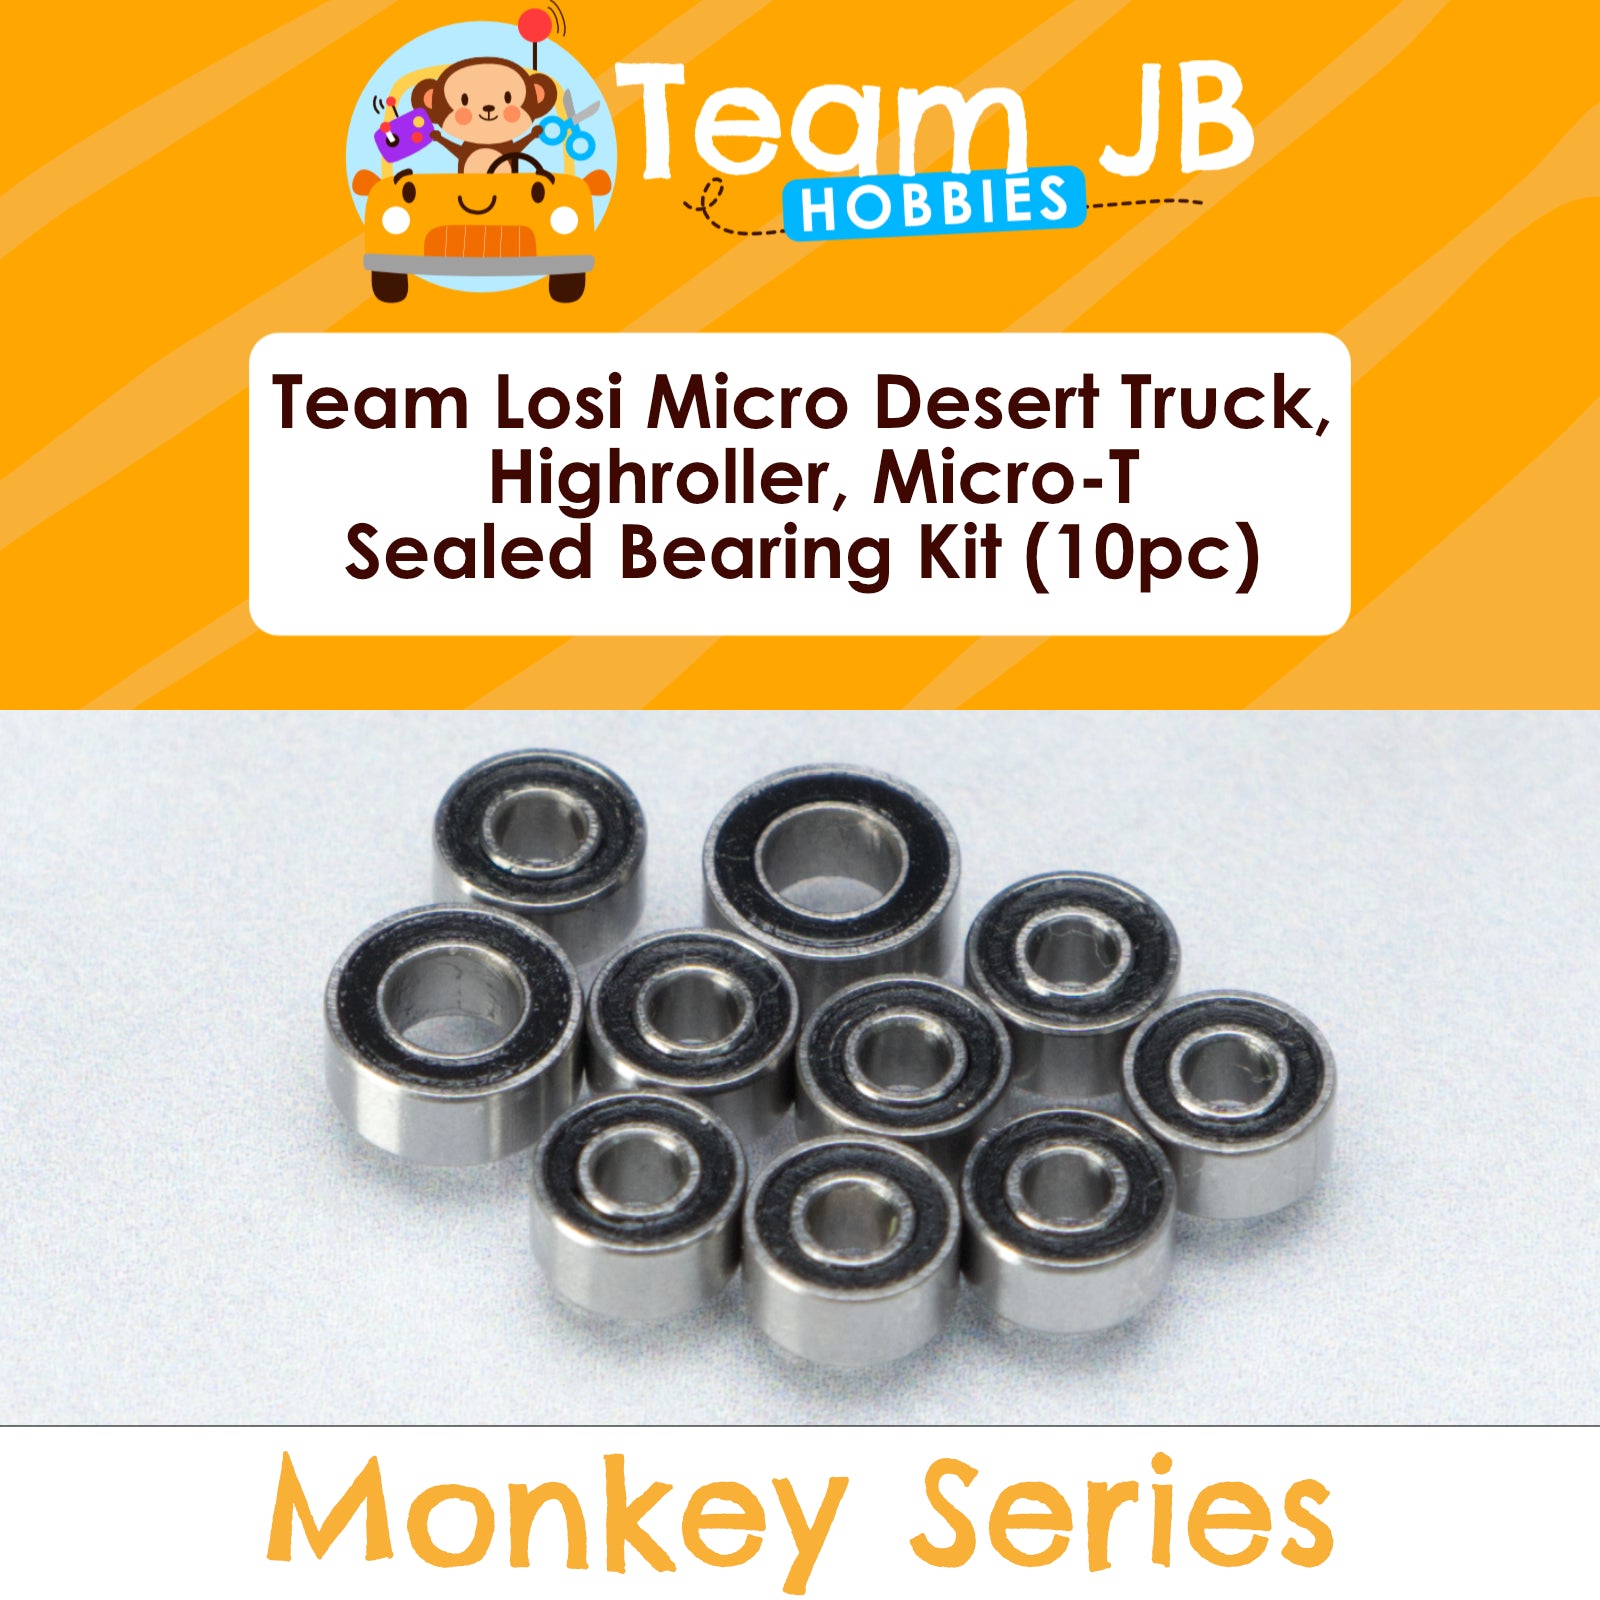 Team Losi Micro Desert Truck, Micro Highroller, Micro-T - Sealed Bearing Kit